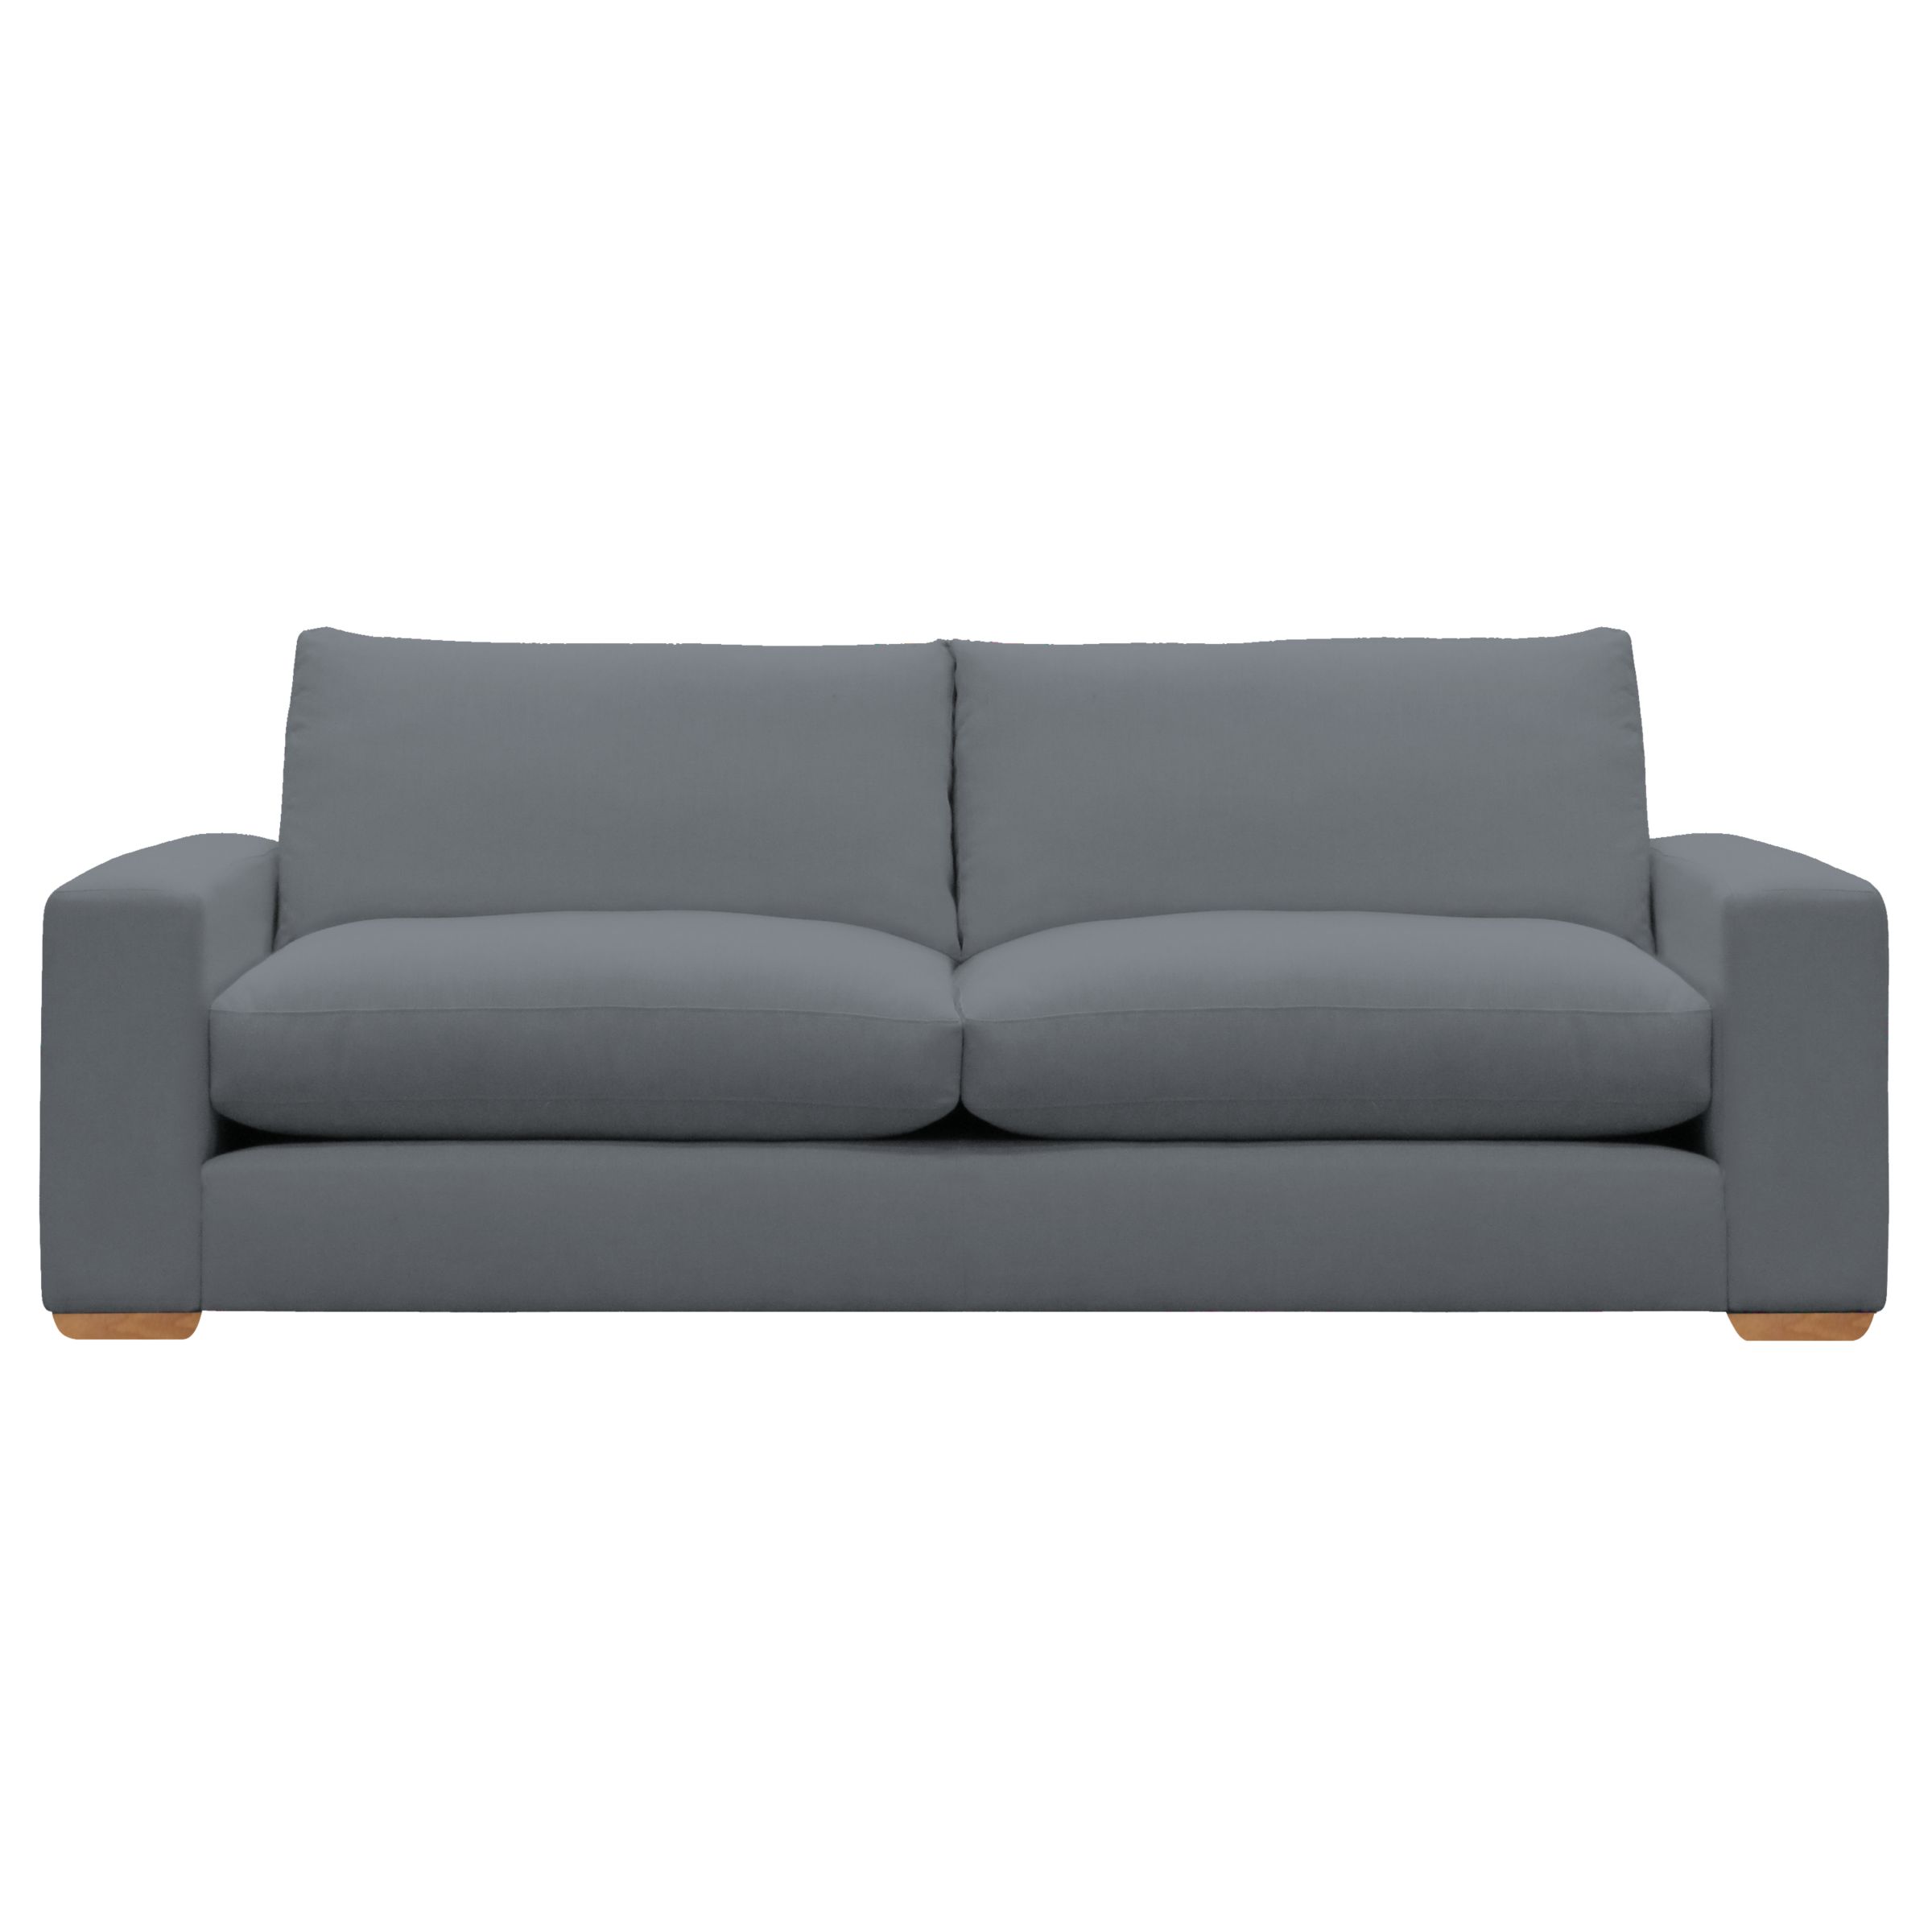 John Lewis Options Wide Arm Grand Sofa, Eaton Grey, width 225cm